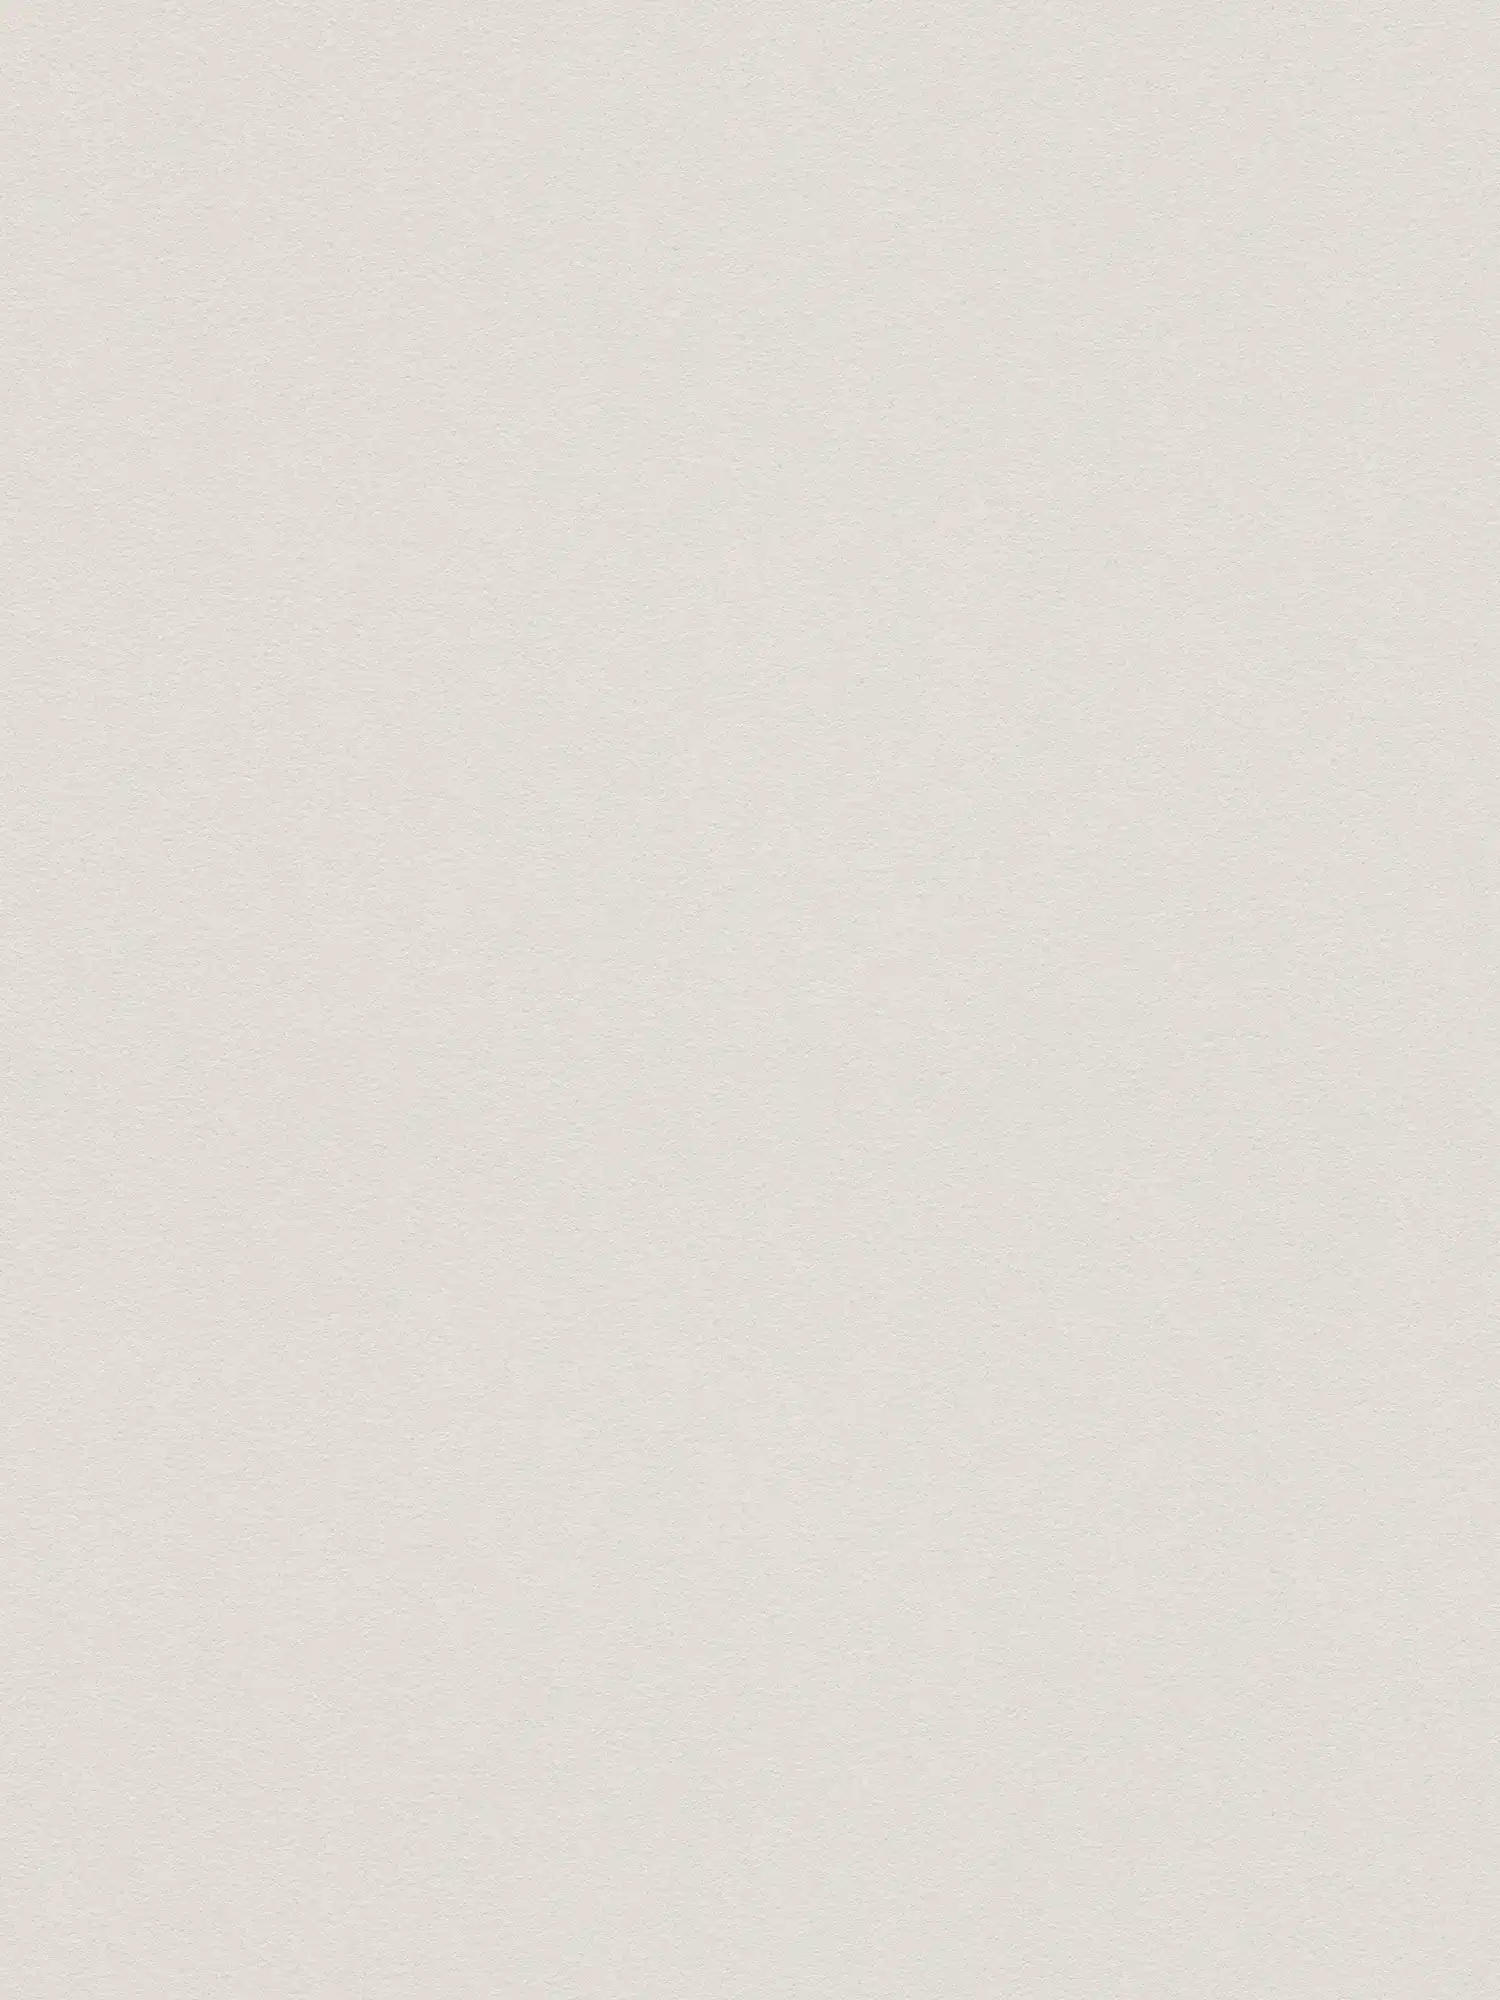 Neutral plain wallpaper with silk matte surface - grey
